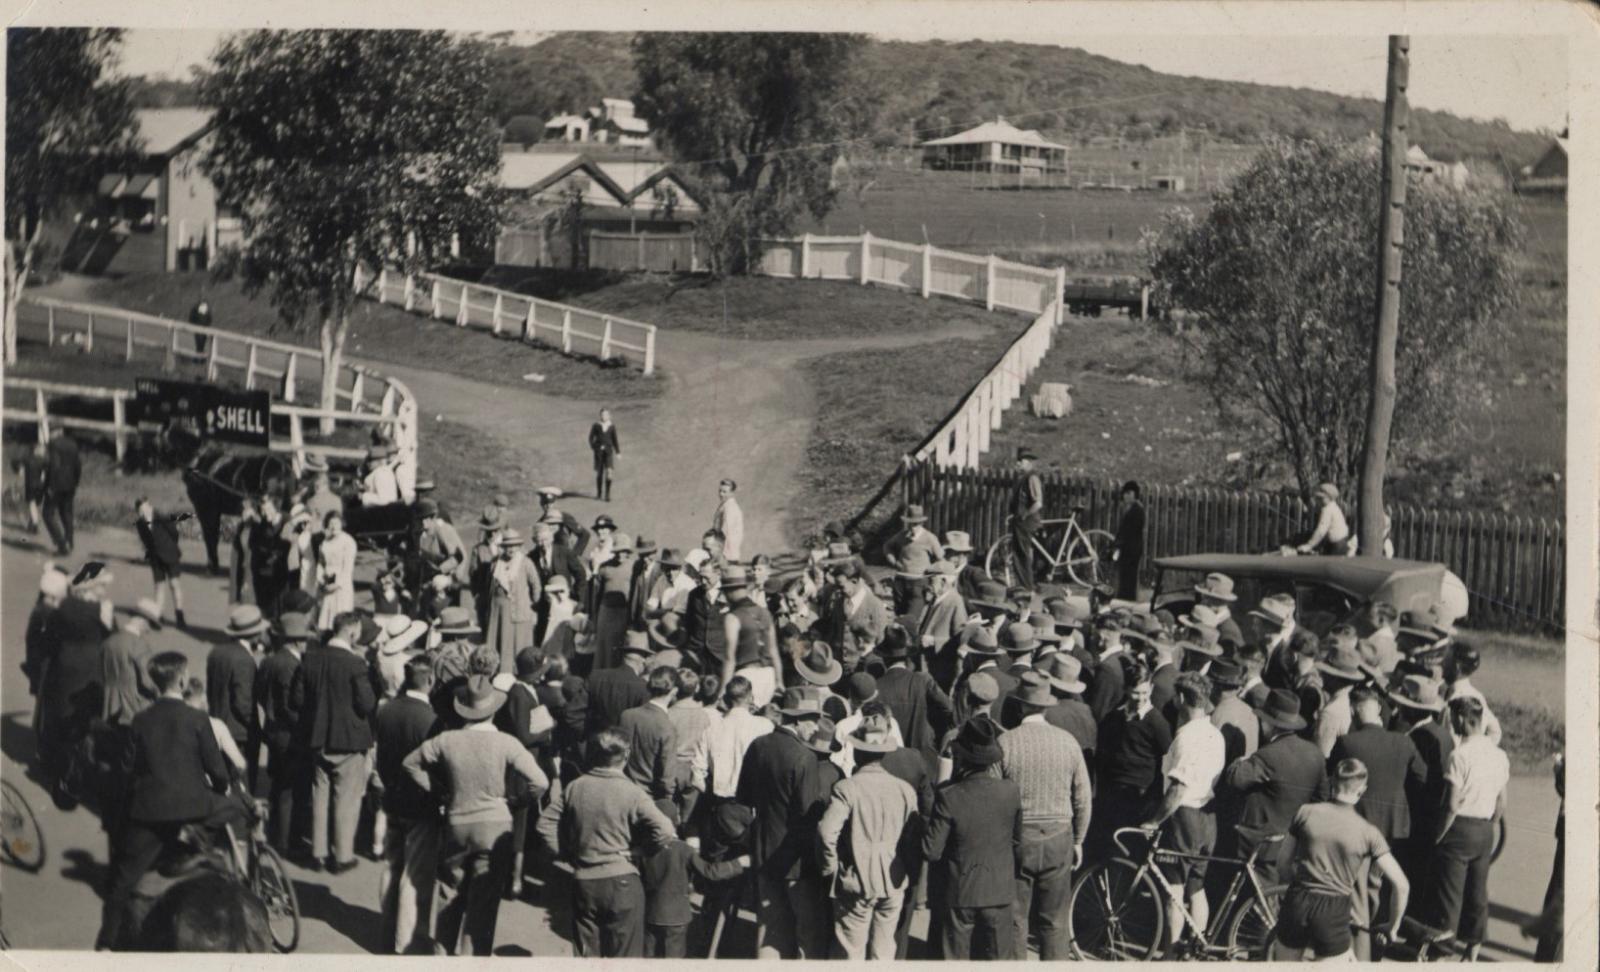 Toodyay Wheelbarrow Race 1935 in correct orientation